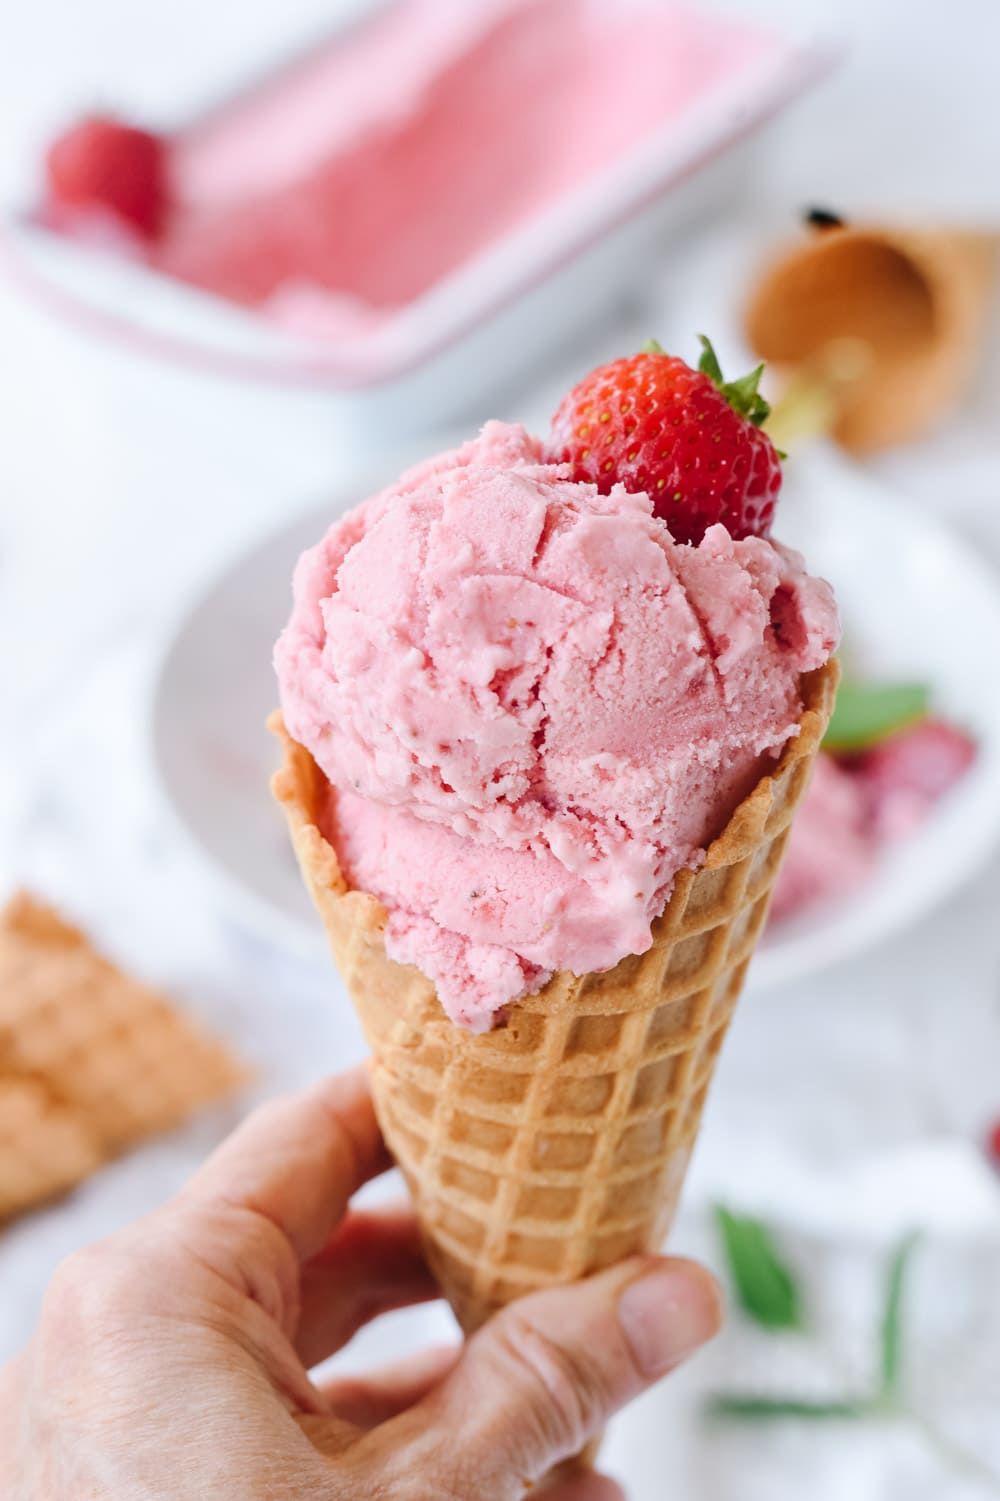 Homemade strawberry ice cream cone